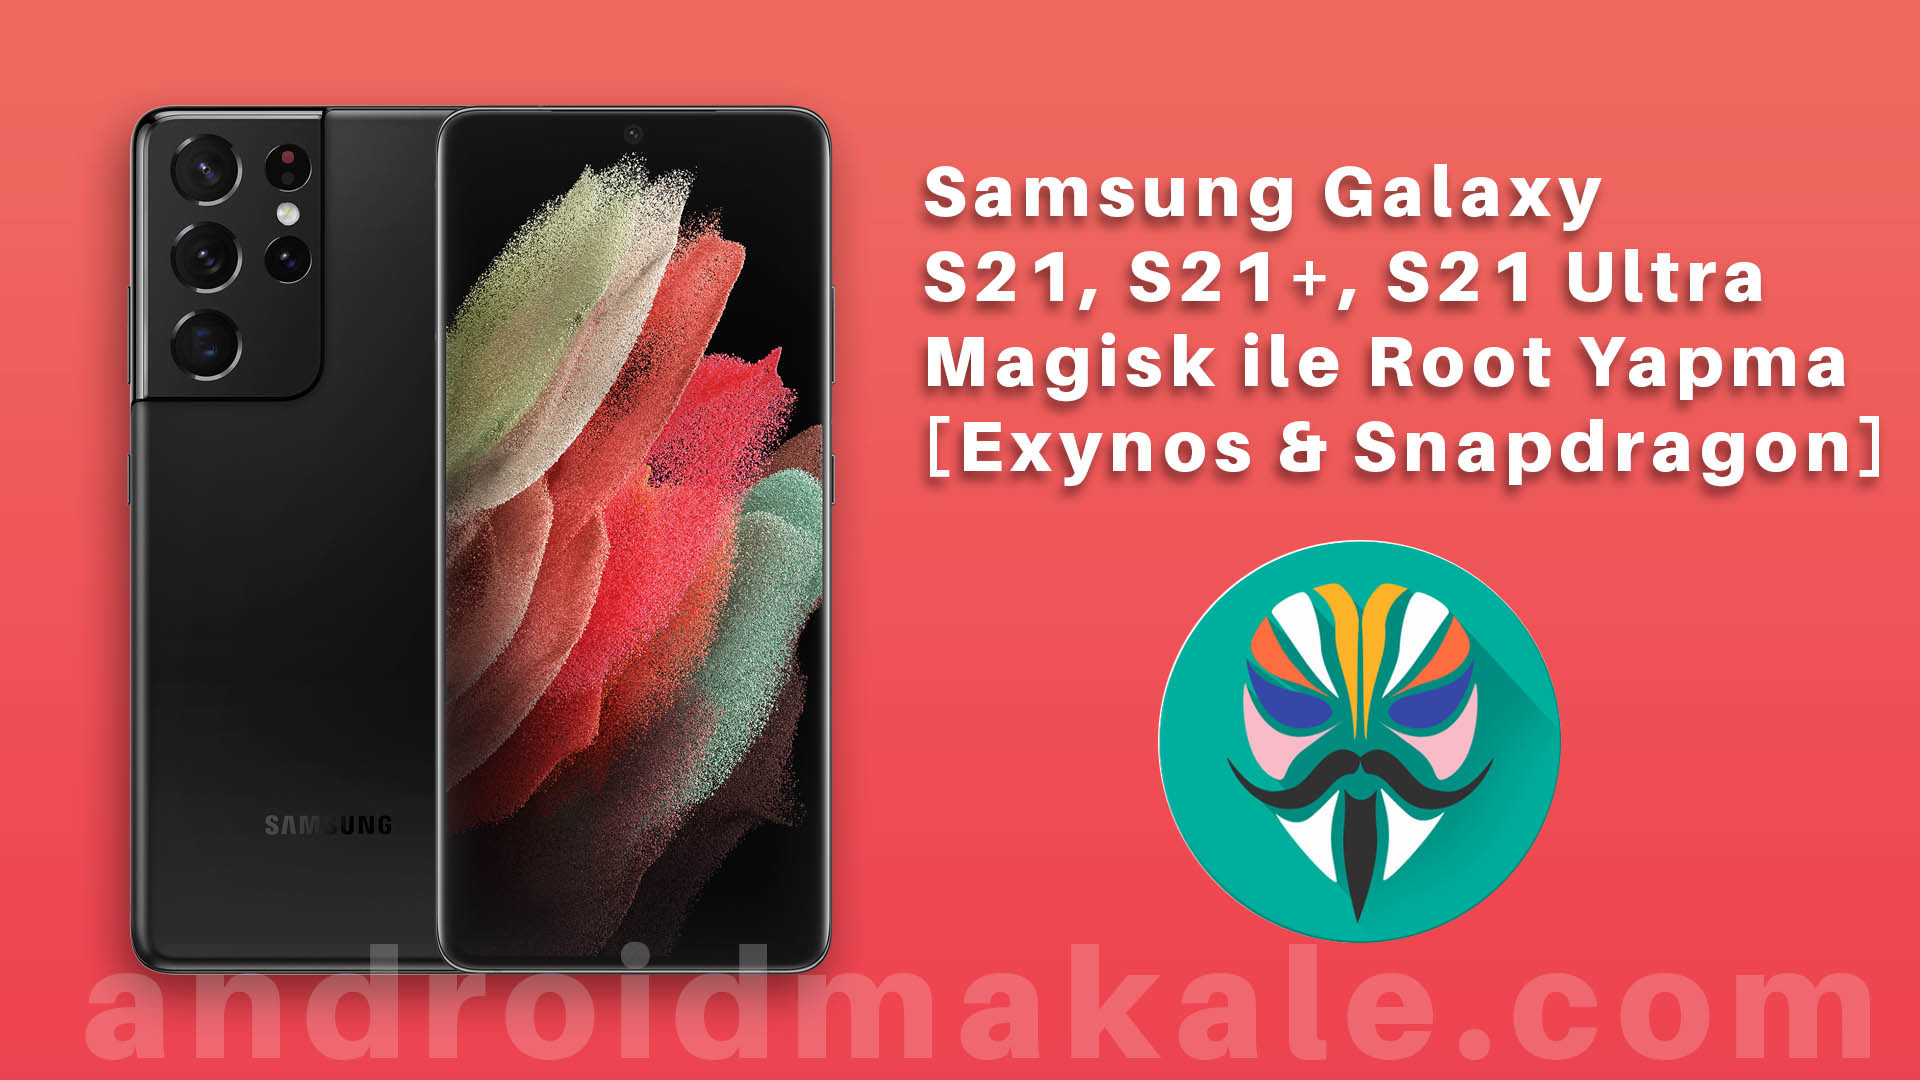 Samsung Galaxy S21, S21+, S21 Ultra Magisk ile Root Yapma [Exynos & Snapdragon] samsung s21 root yapma Magisk root galaxy 